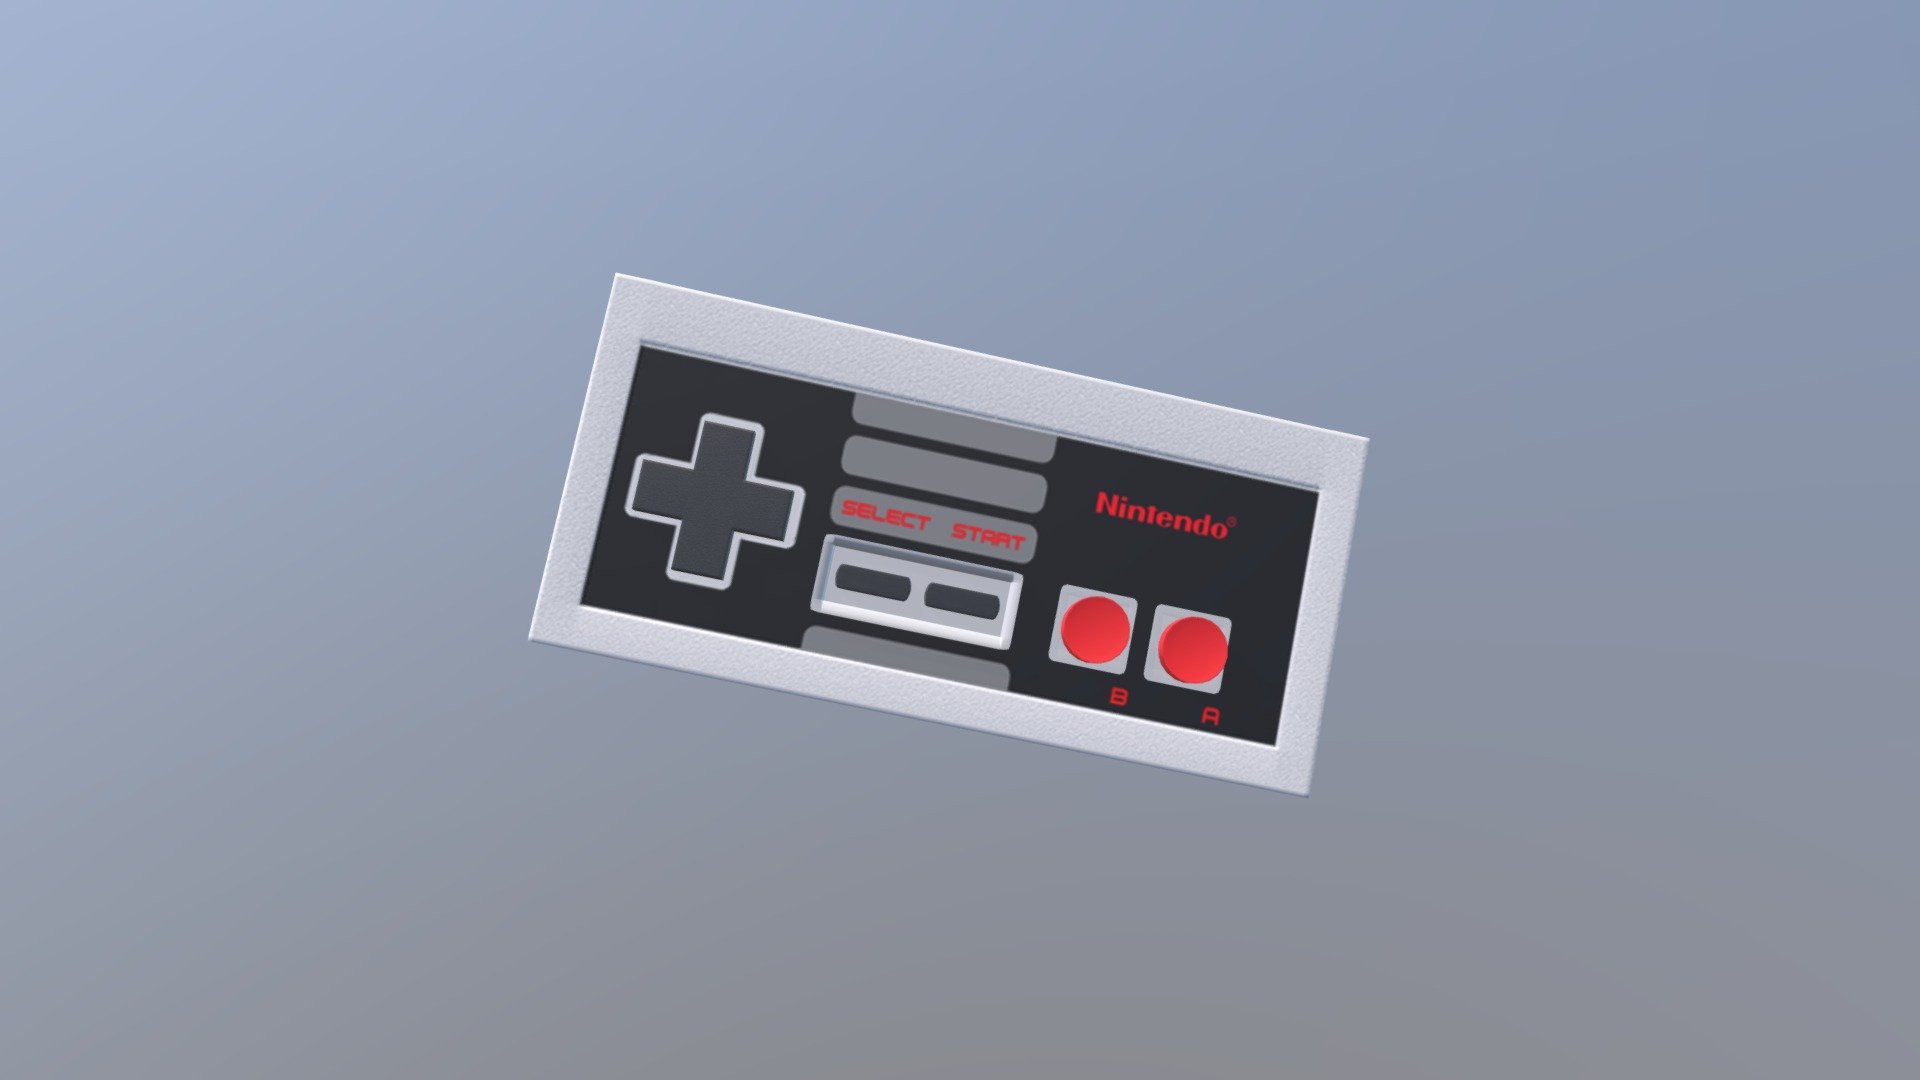 Nes Controller - Nintendo Entertainment System